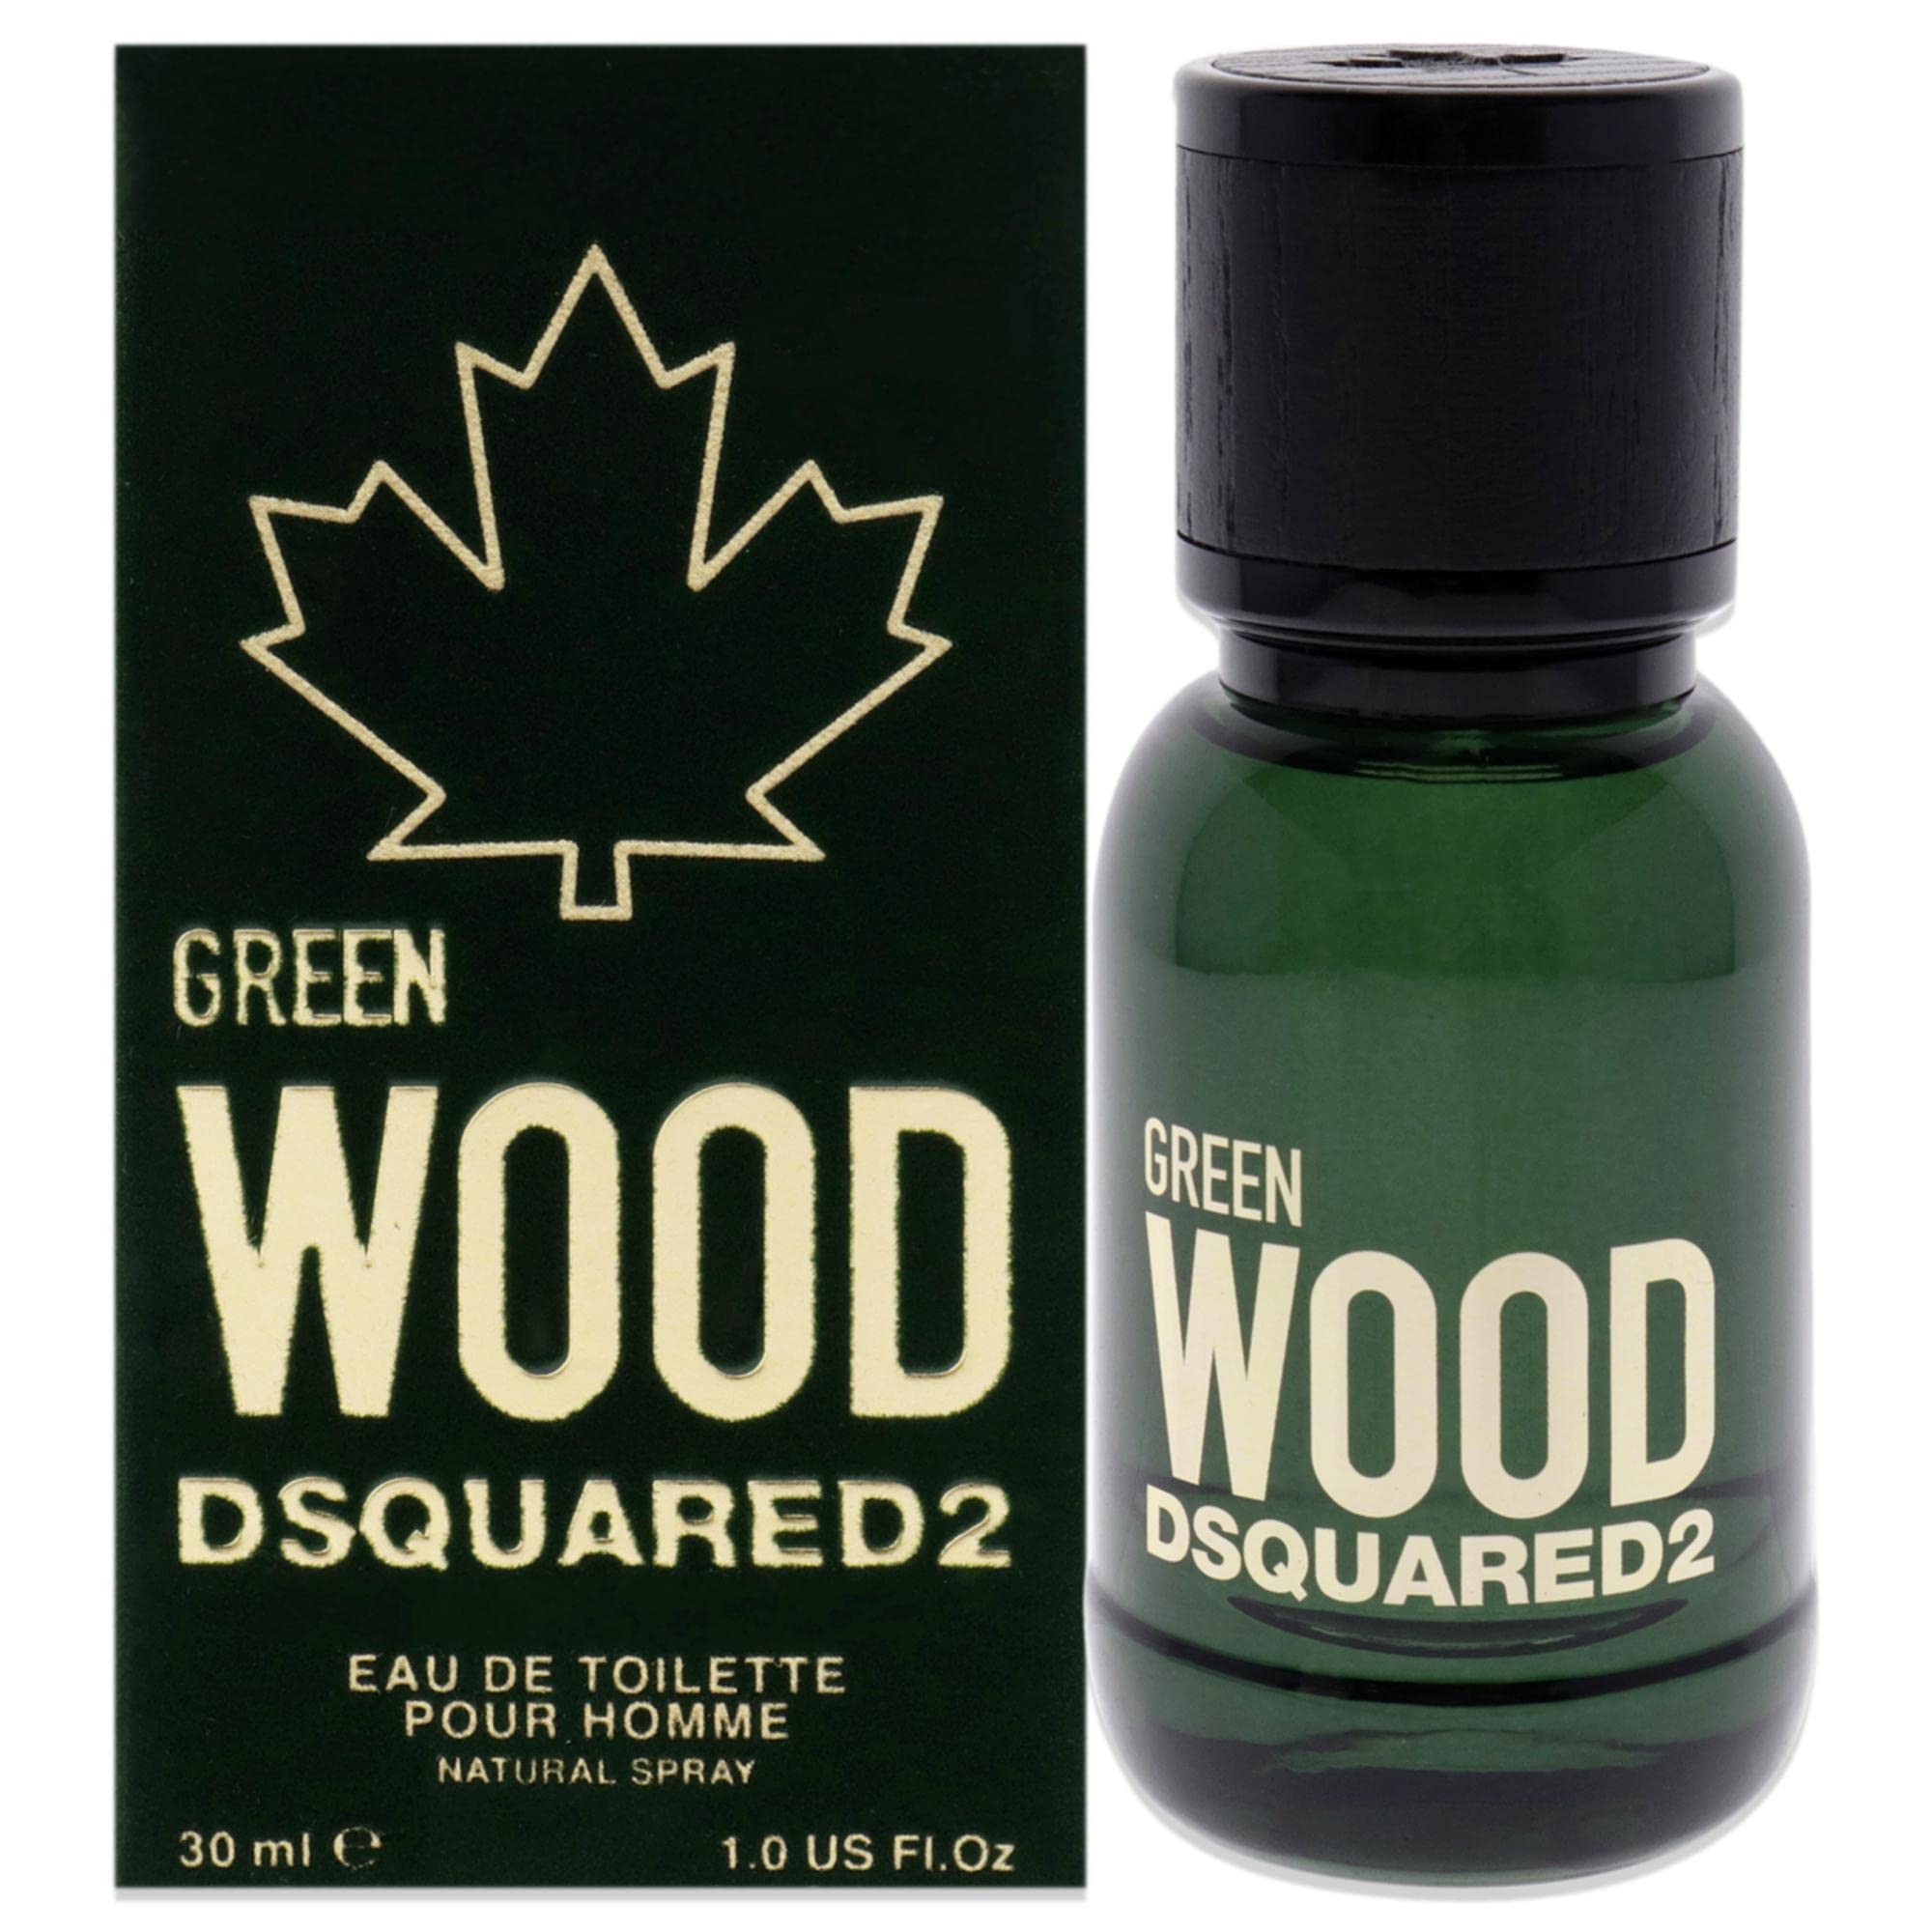 Image of Wood Dsquared2 Green Wood - 30ml